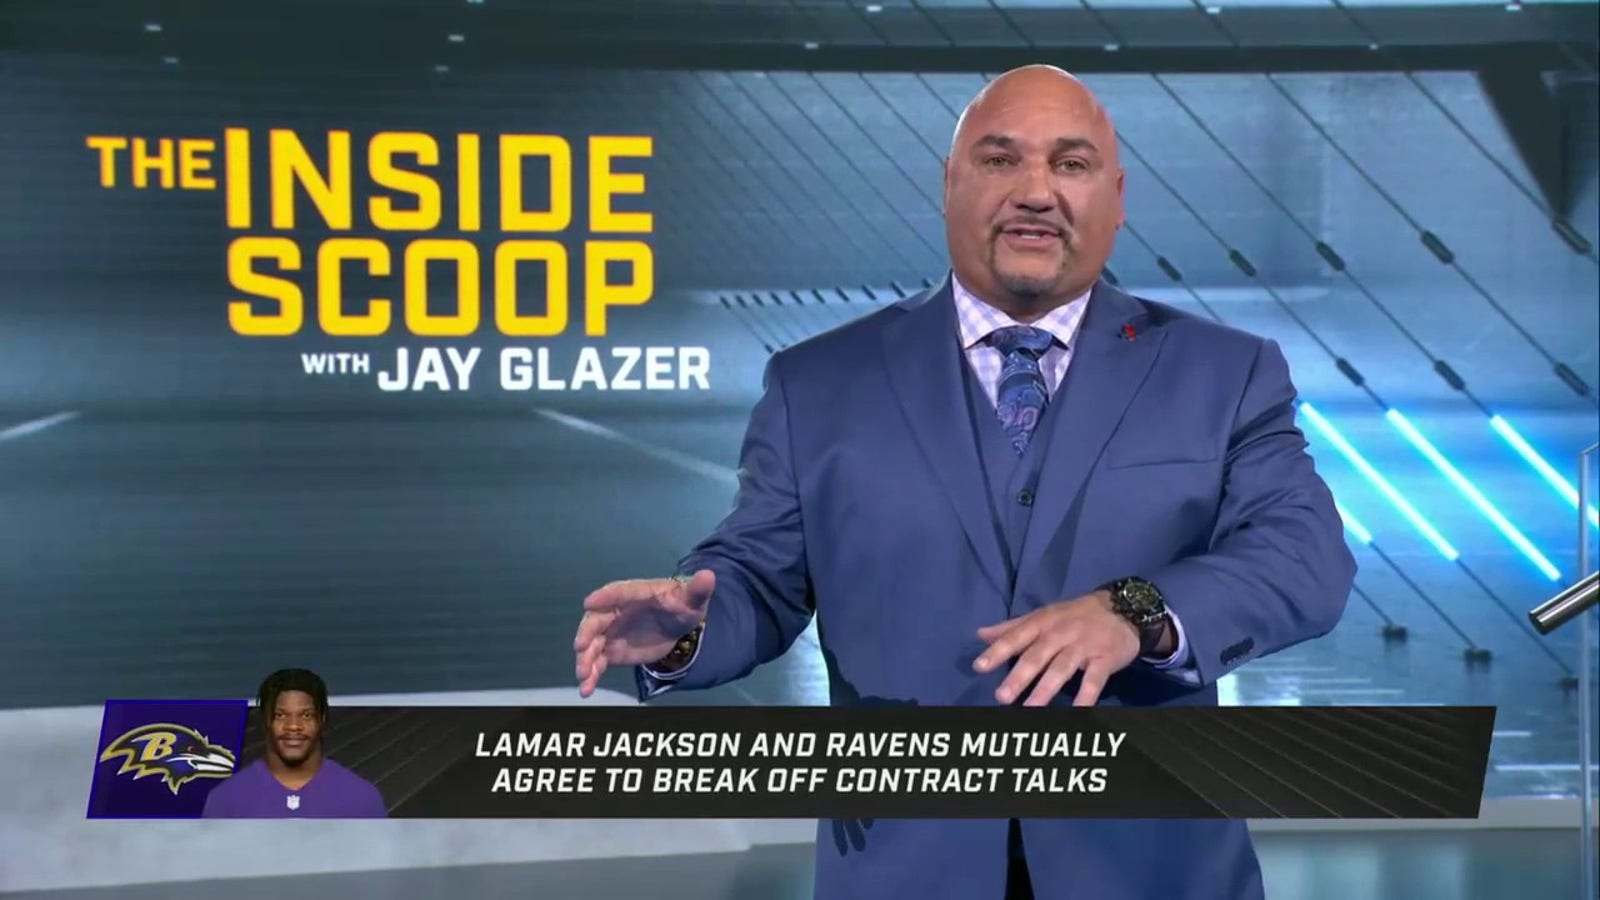 Lamar Jackson and the Ravens break off contract talks